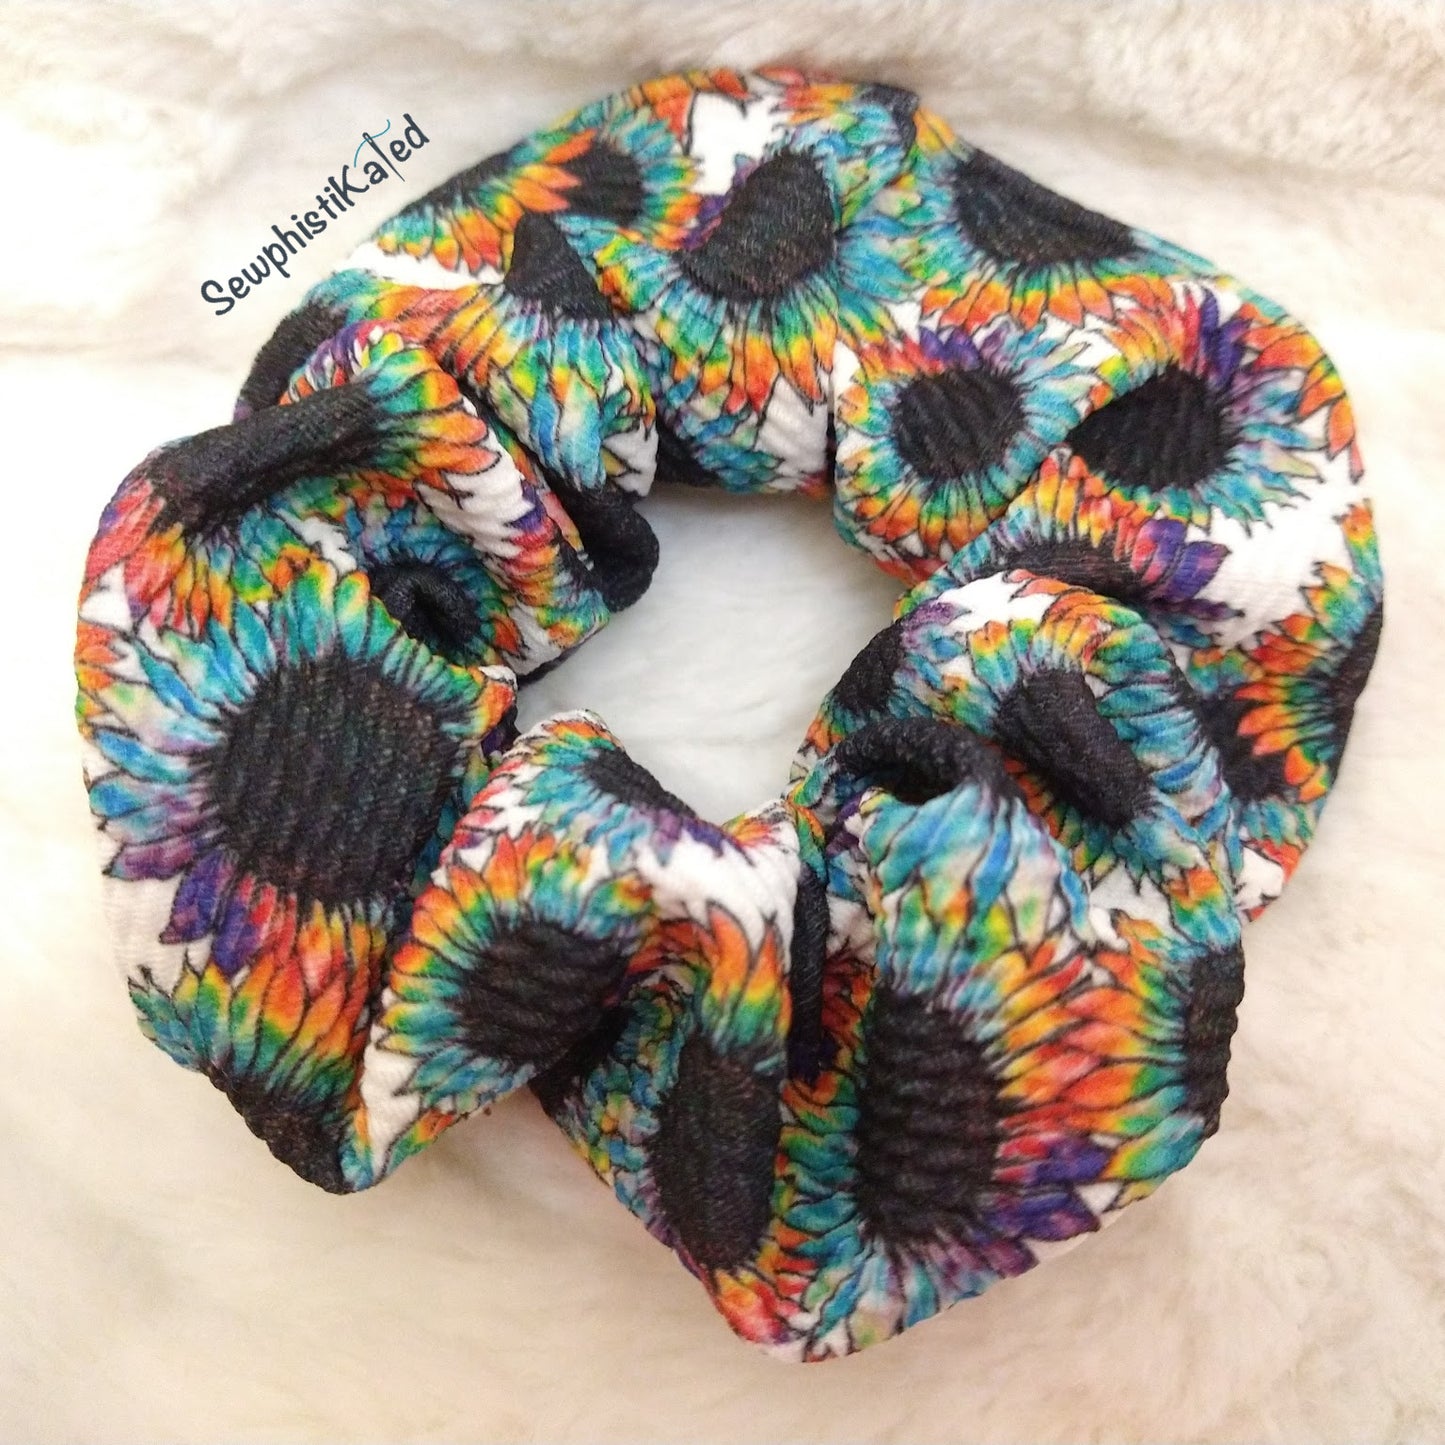 Rainbow Sunflowers Twisted Headband & Scrunchie